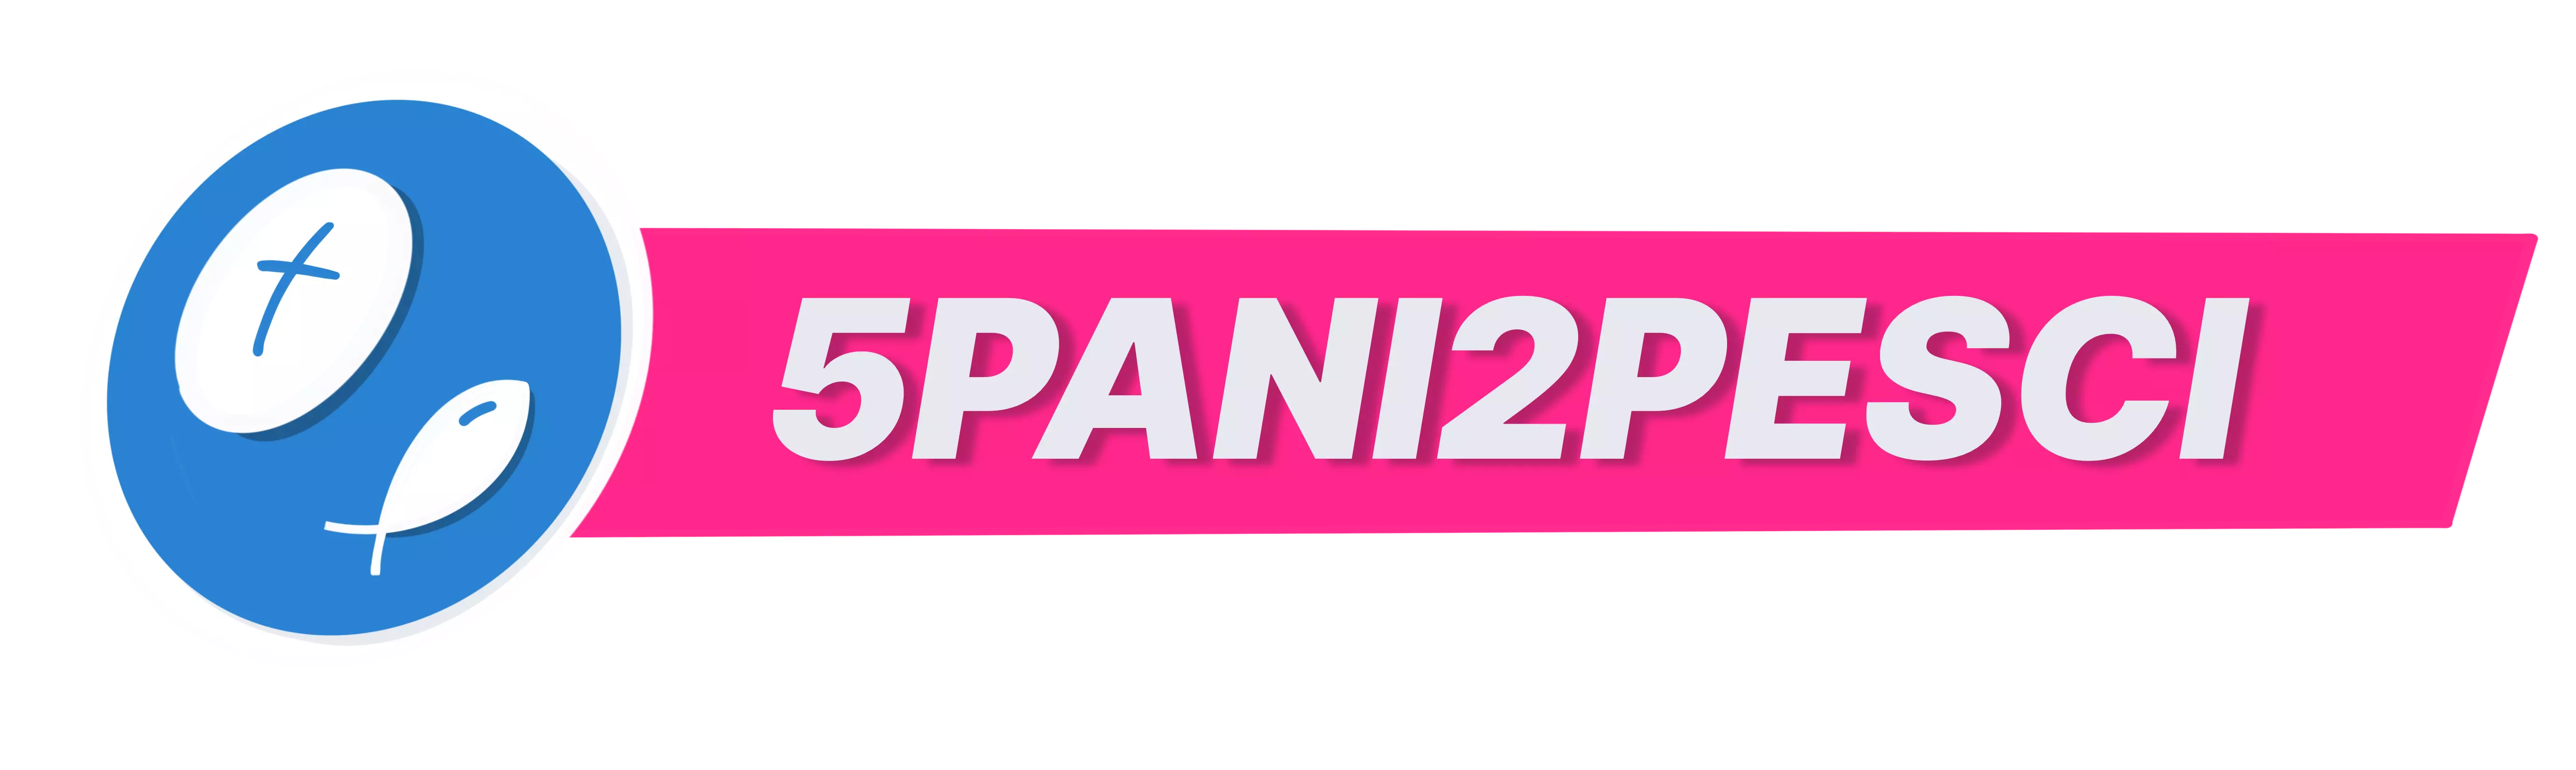 5pani2pesci logo